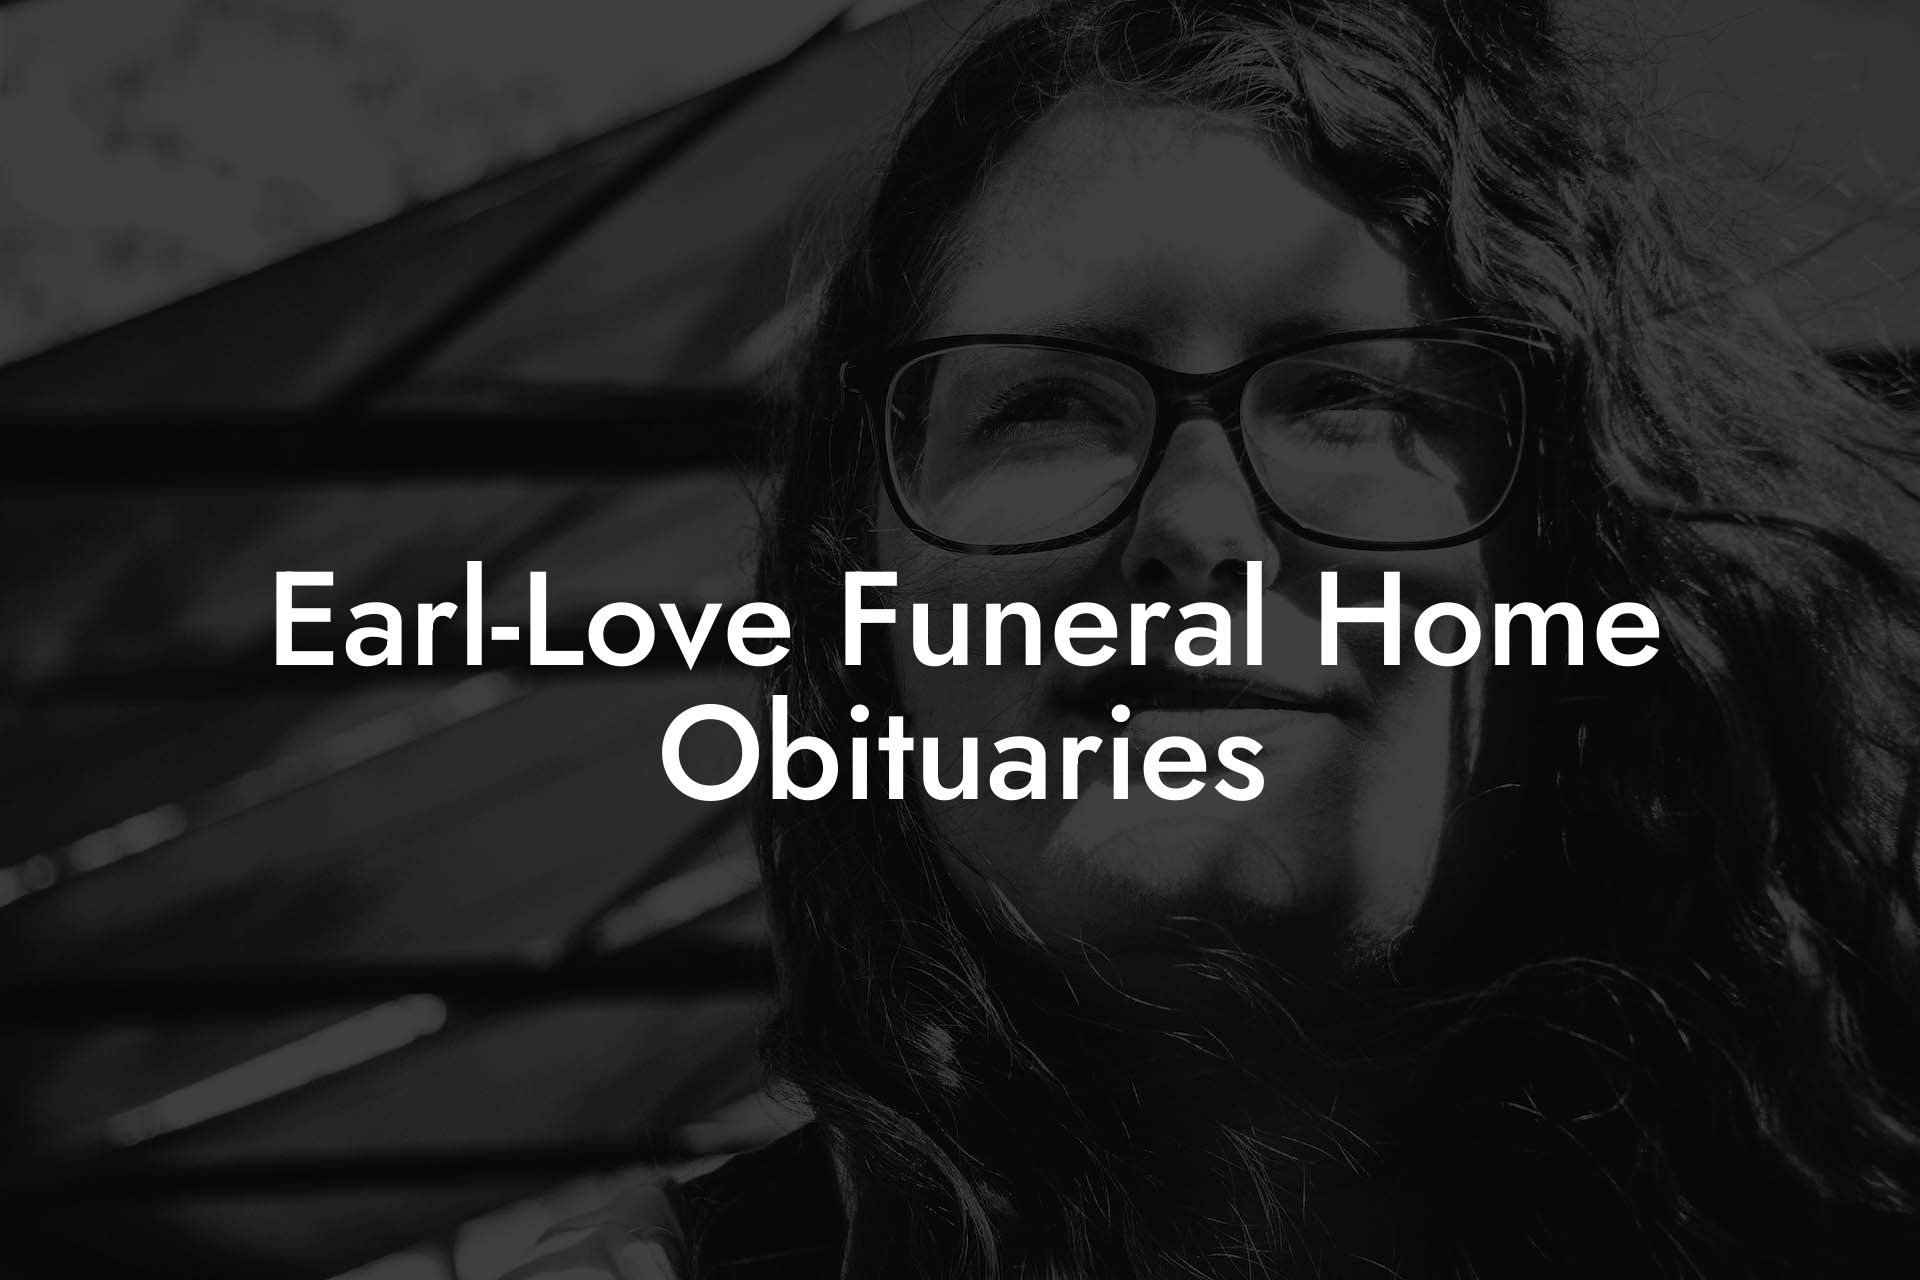 Earl-Love Funeral Home Obituaries